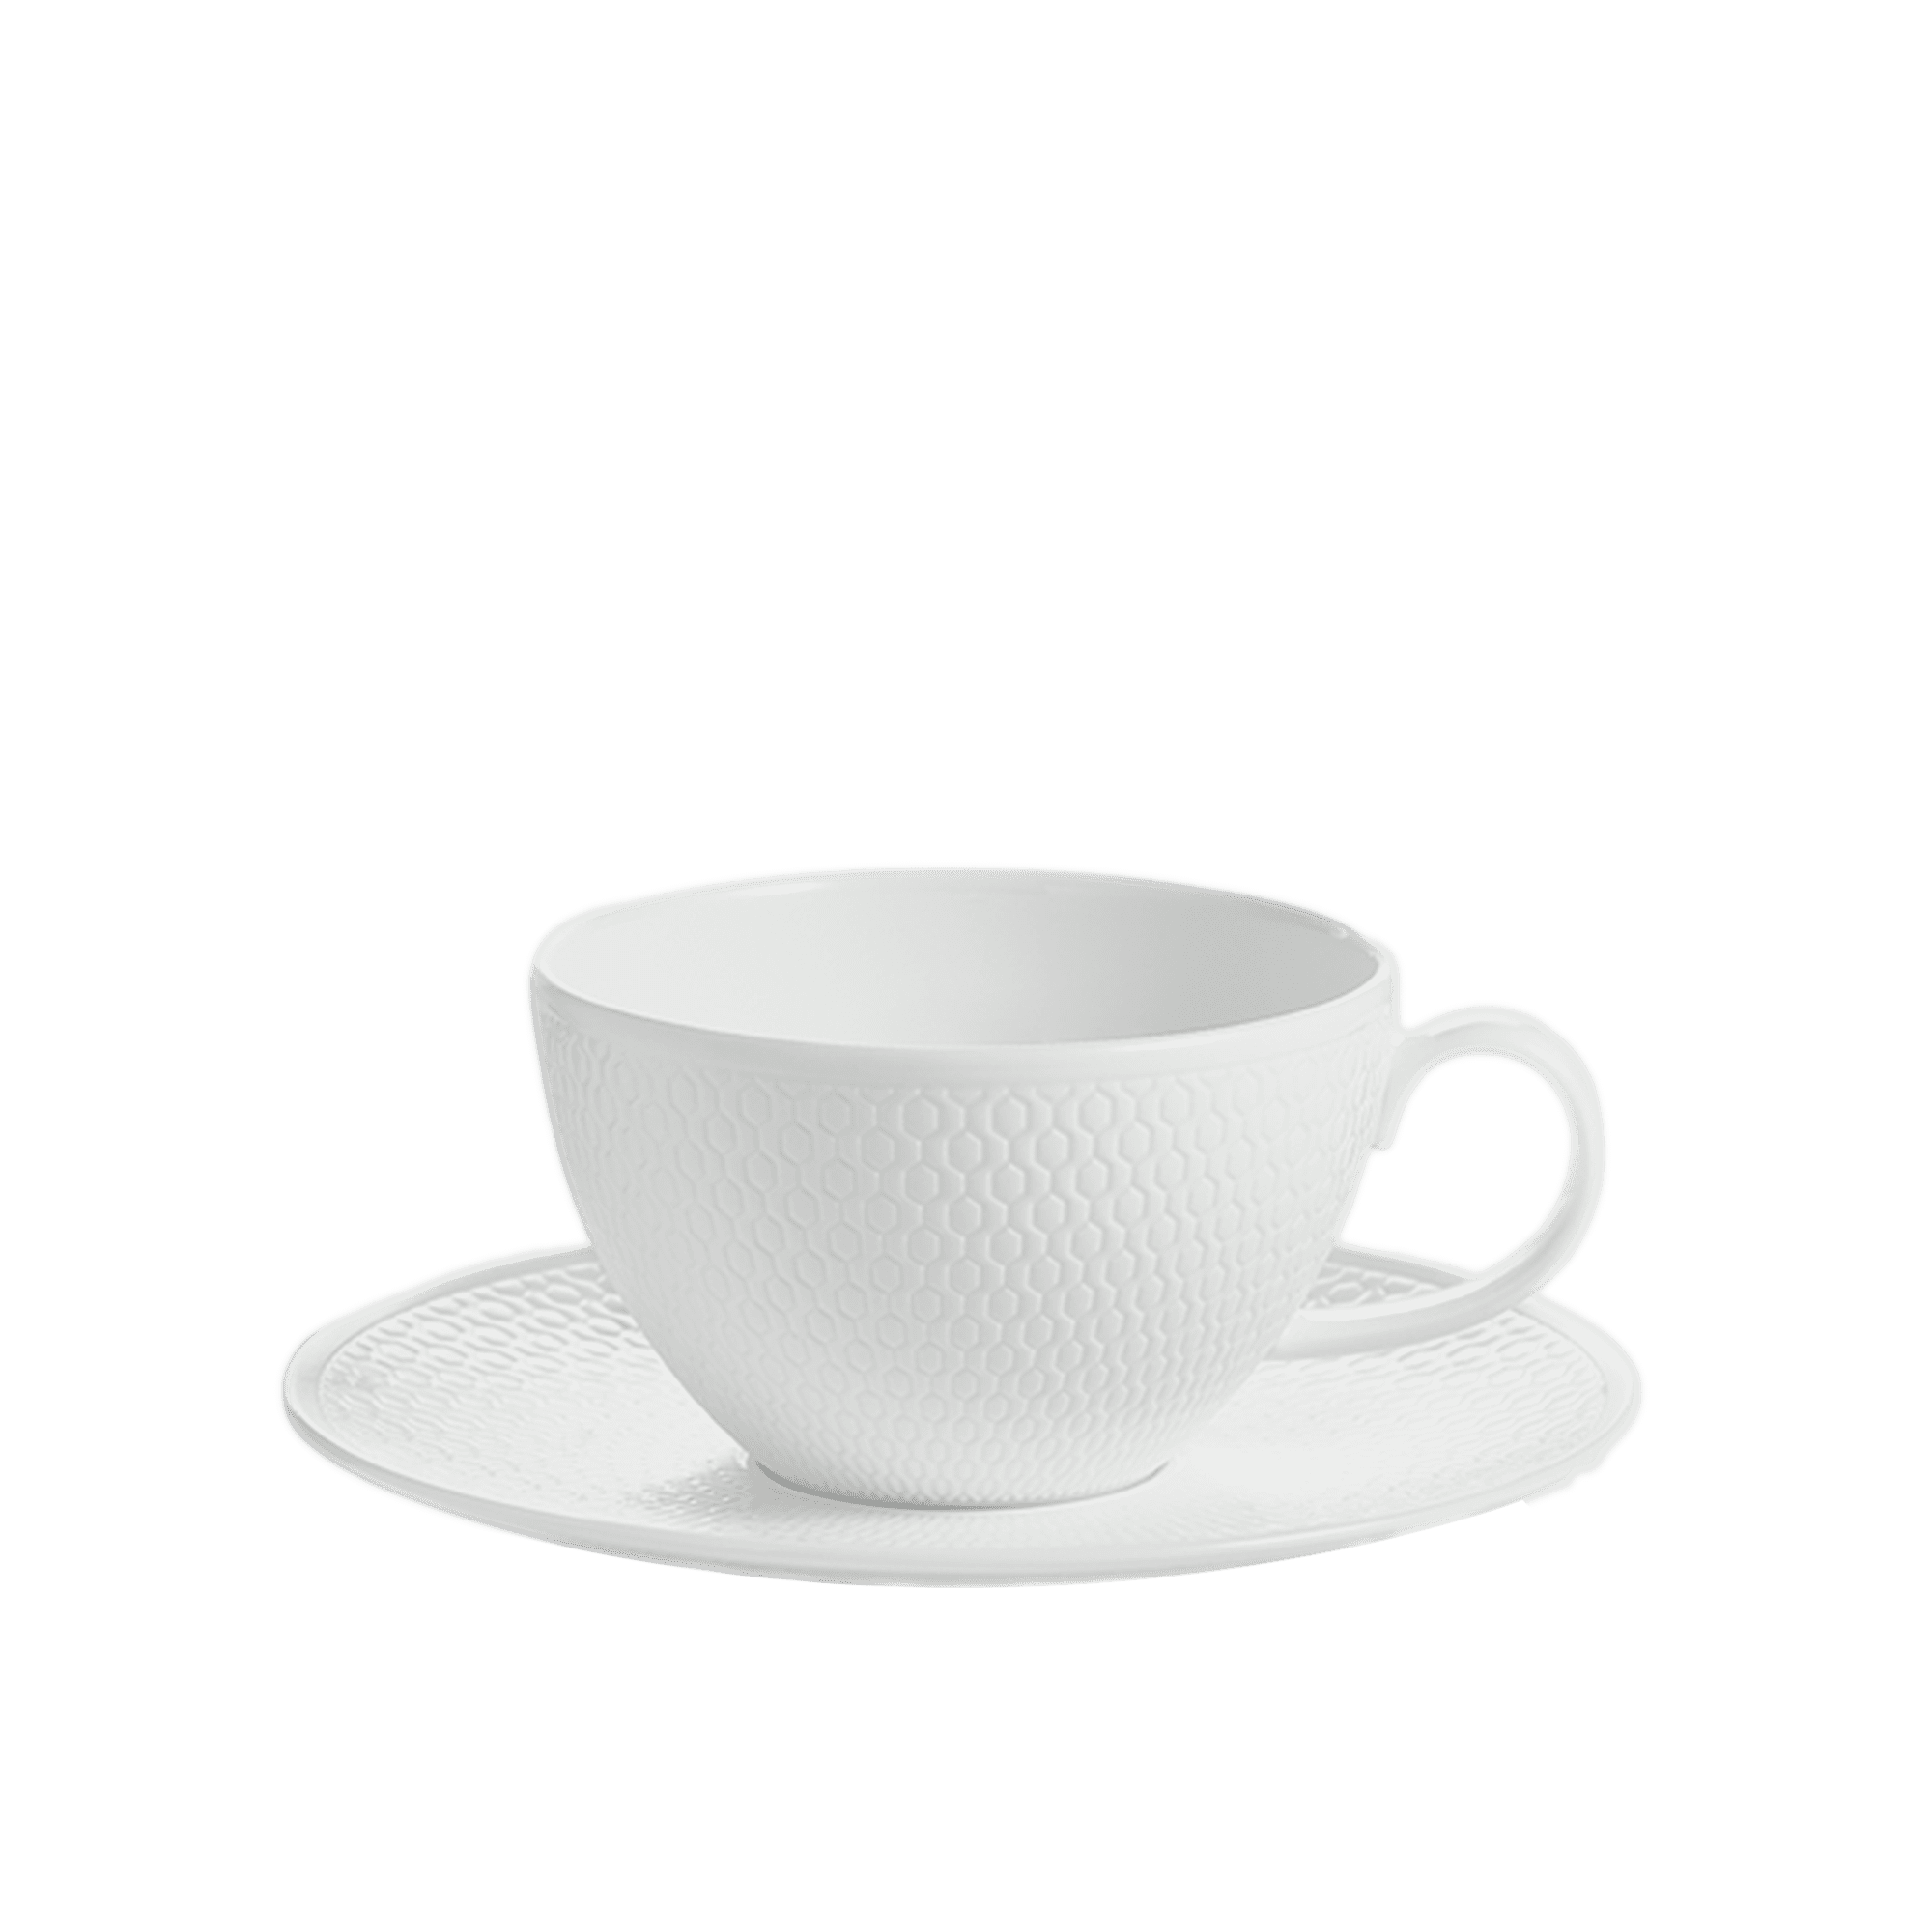 Gio Tea Cup & Saucer